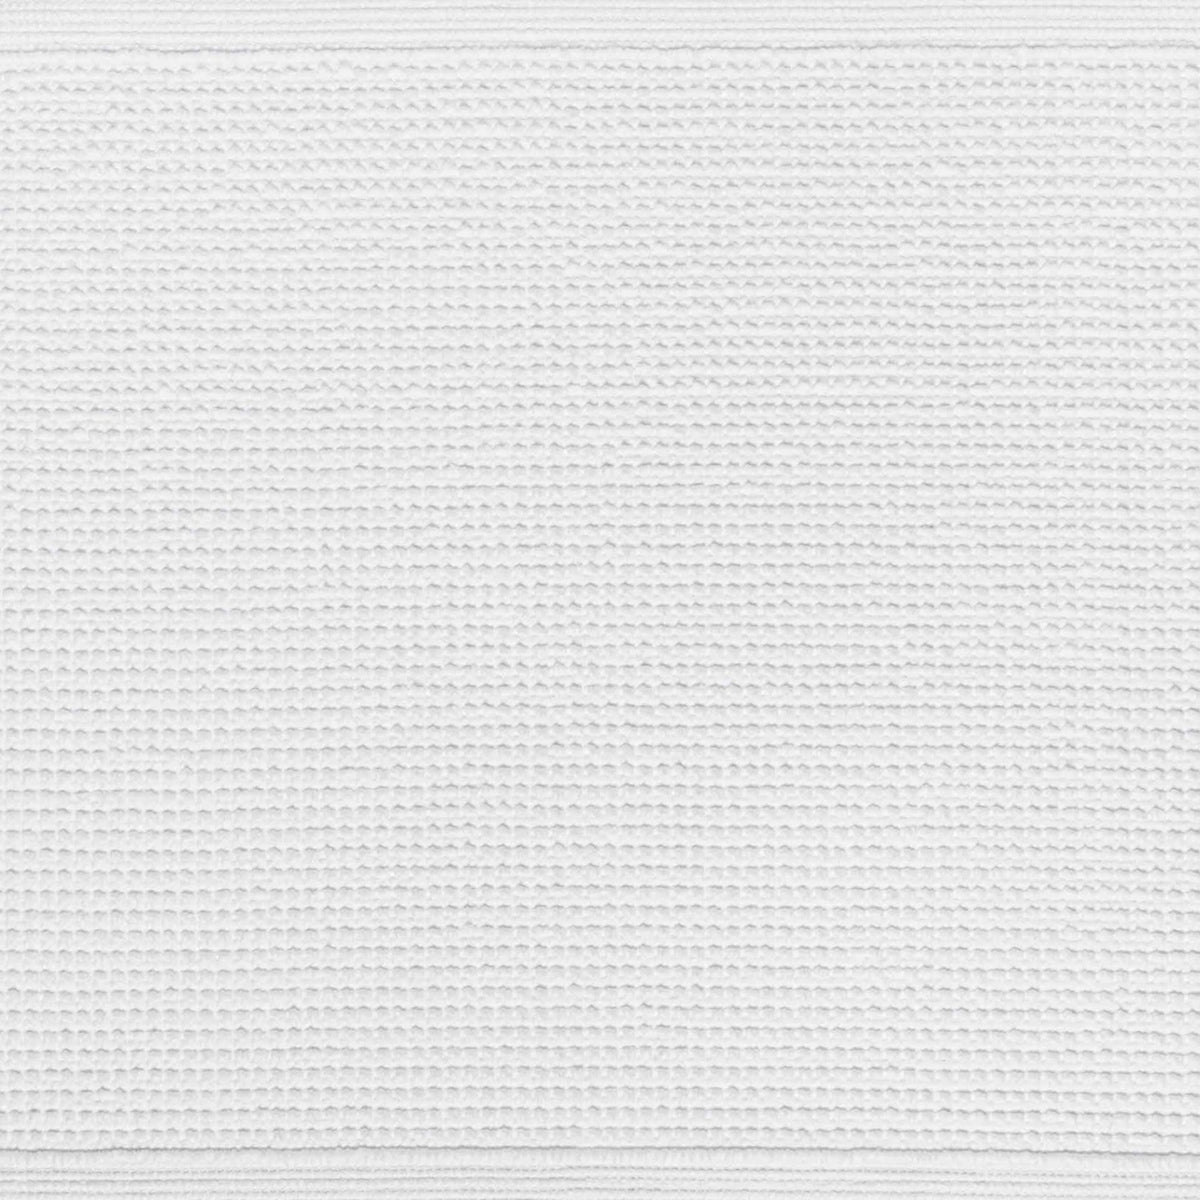 Swatch Sample of Graccioza Melody Bath Linens in Color White